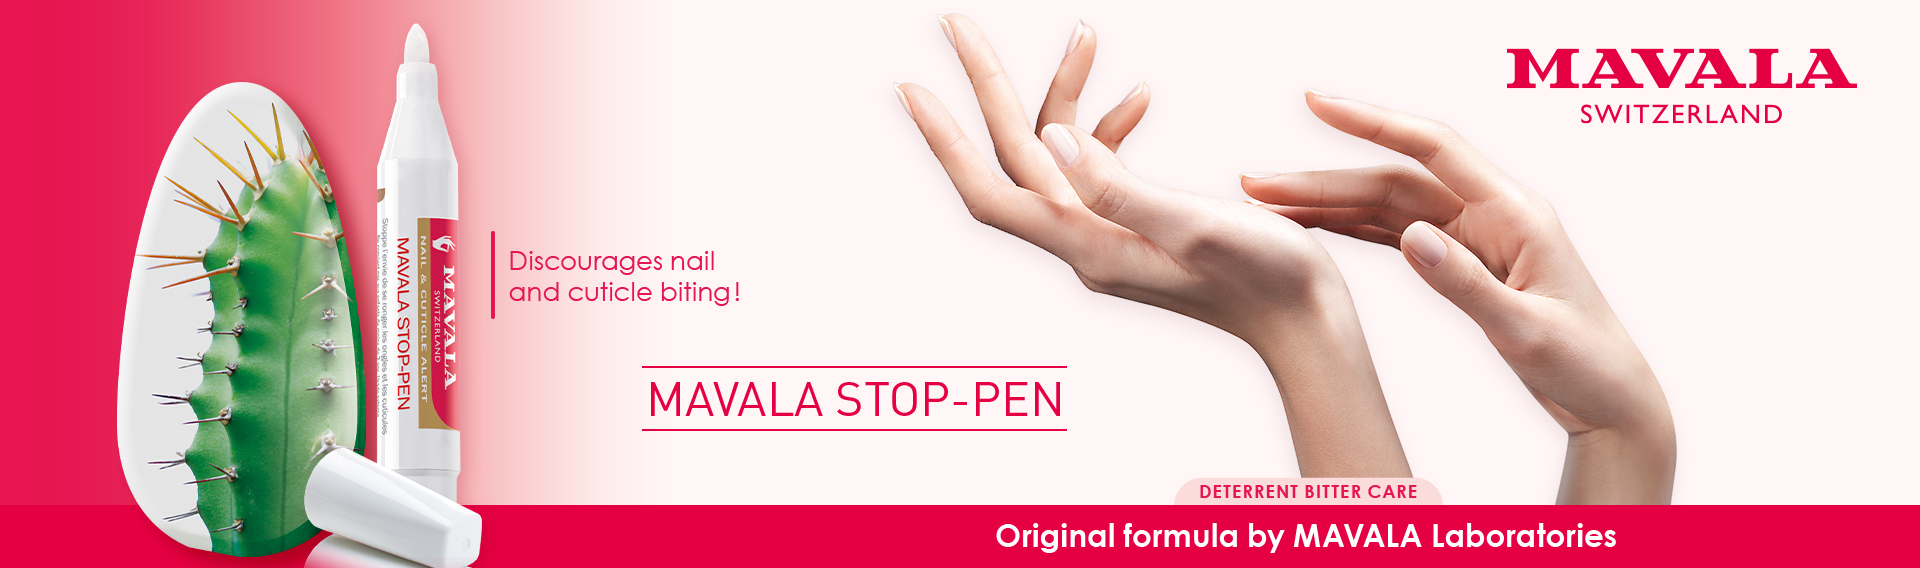 Banner Mavala Stop-Pen